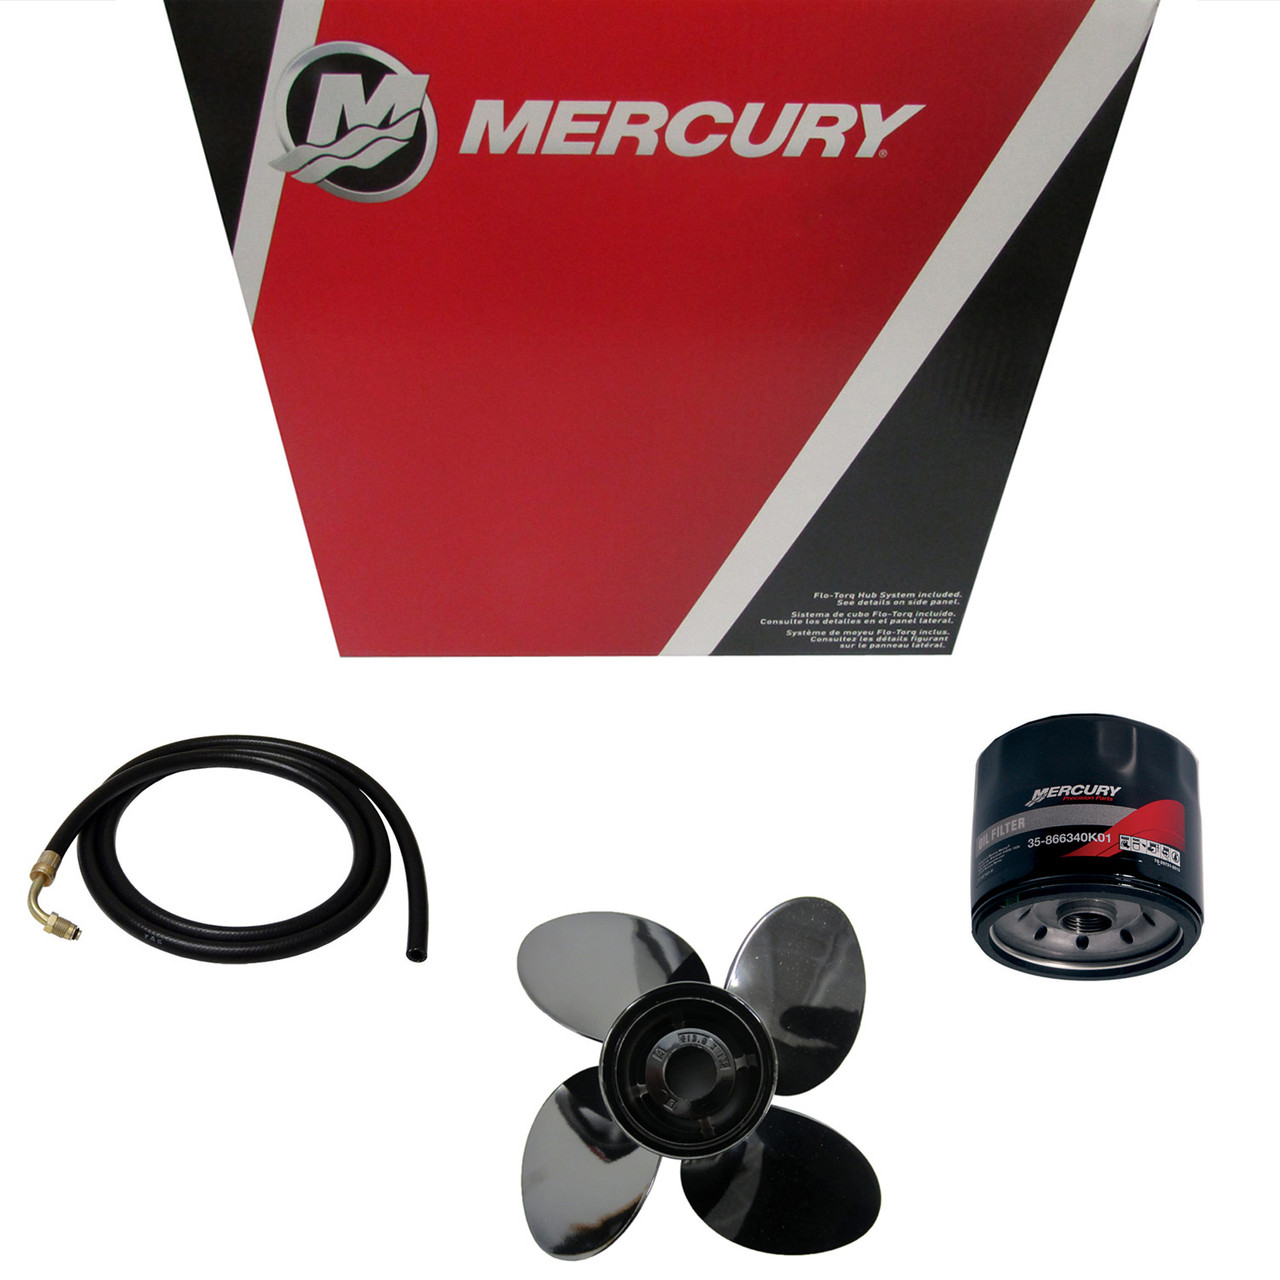 Mercury Marine / Mercruiser New OEM Max Lablt 15.3R32, 889970L64